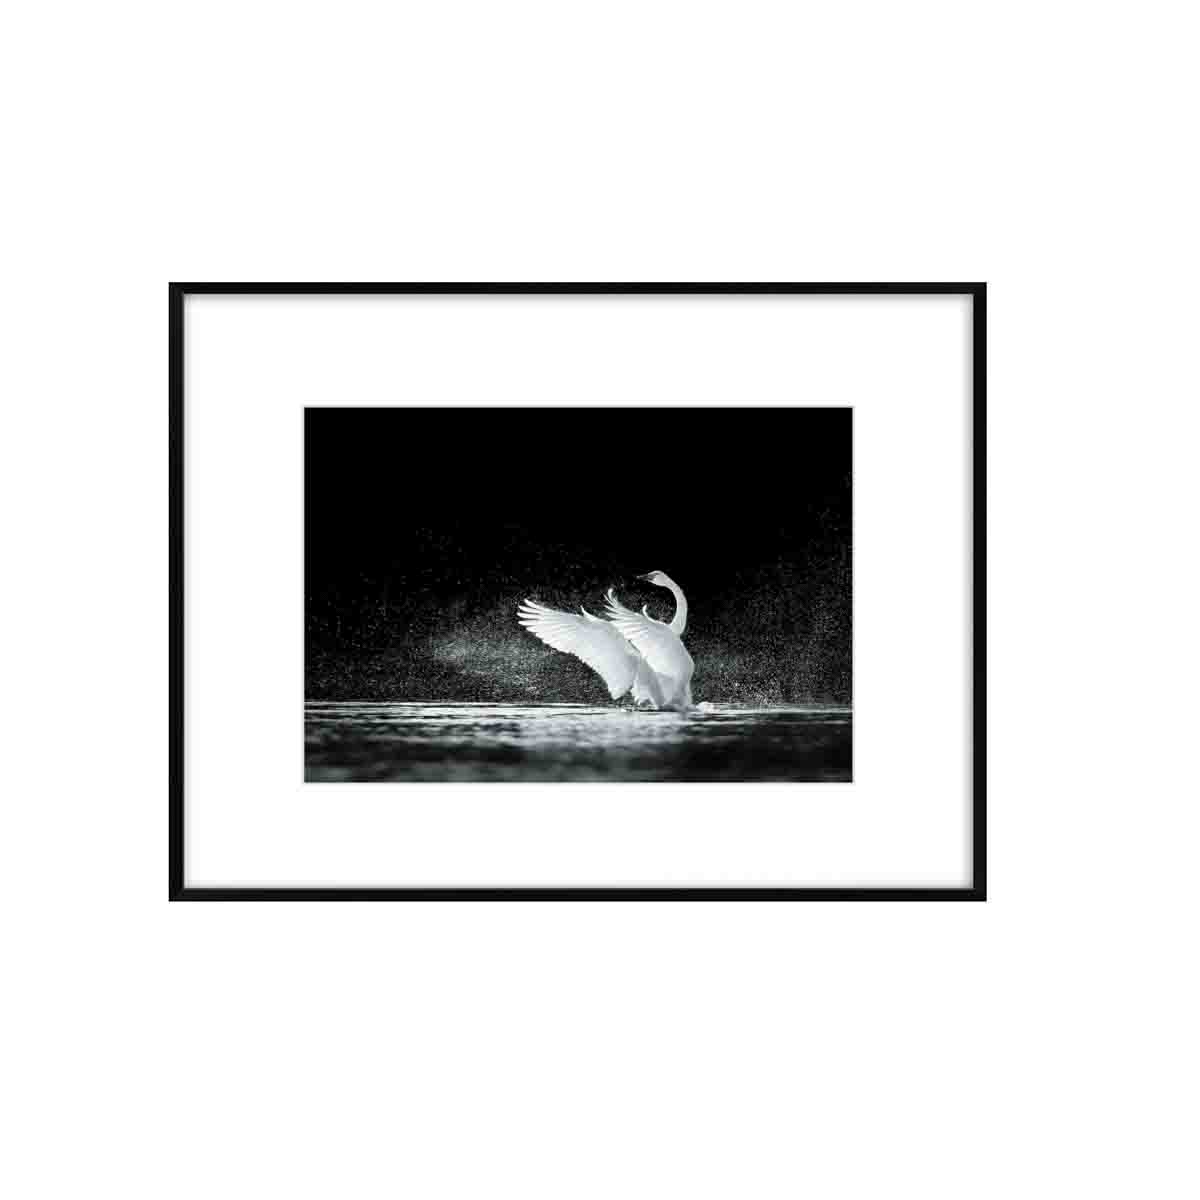 Obraz DENVER czarno-biały 50,8x40,8 cm